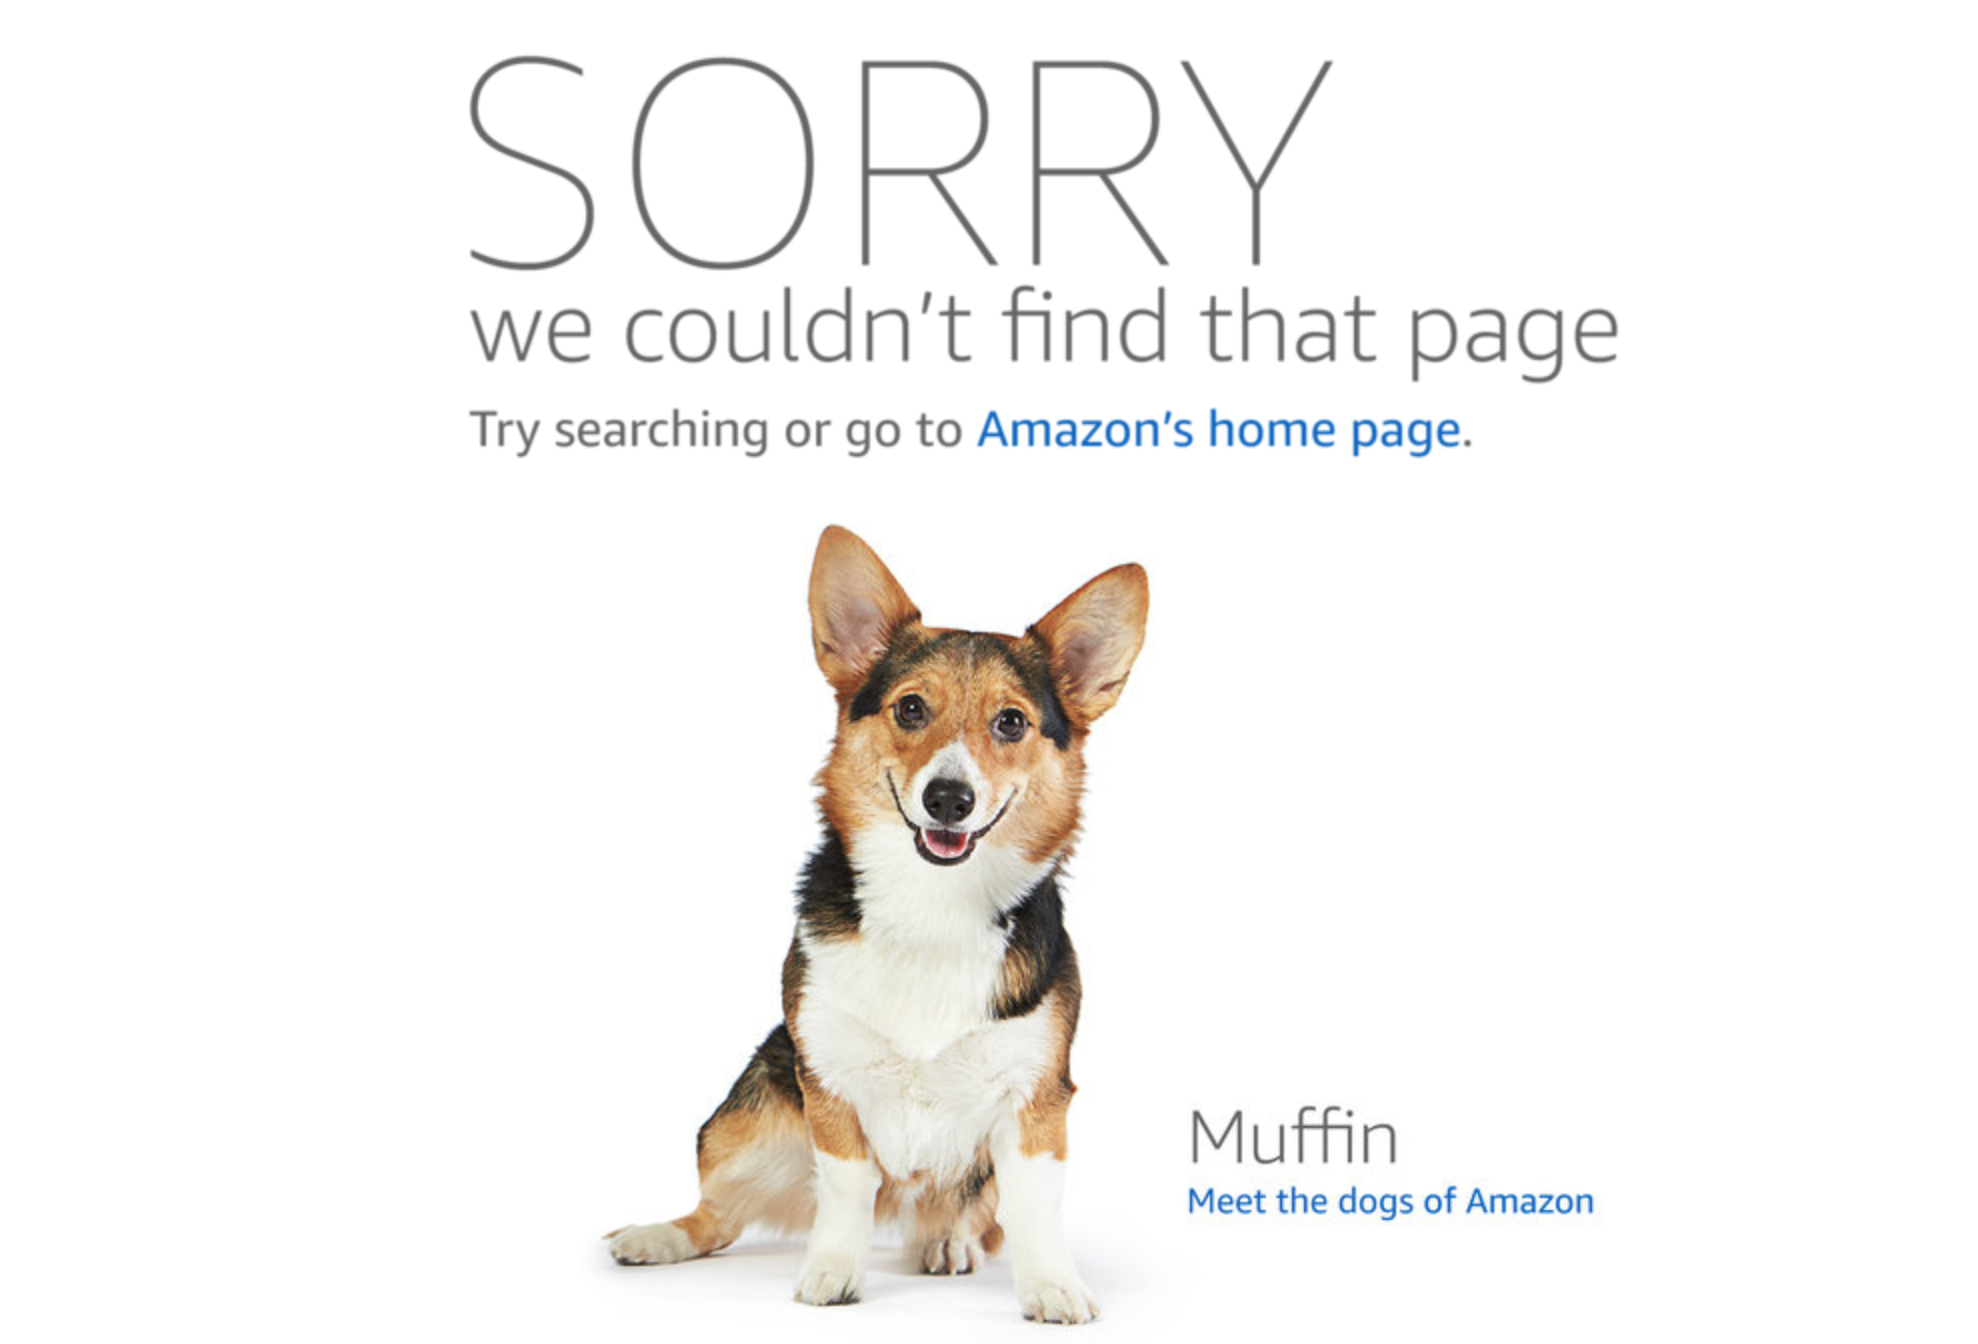 Amazon’s custom 404 page